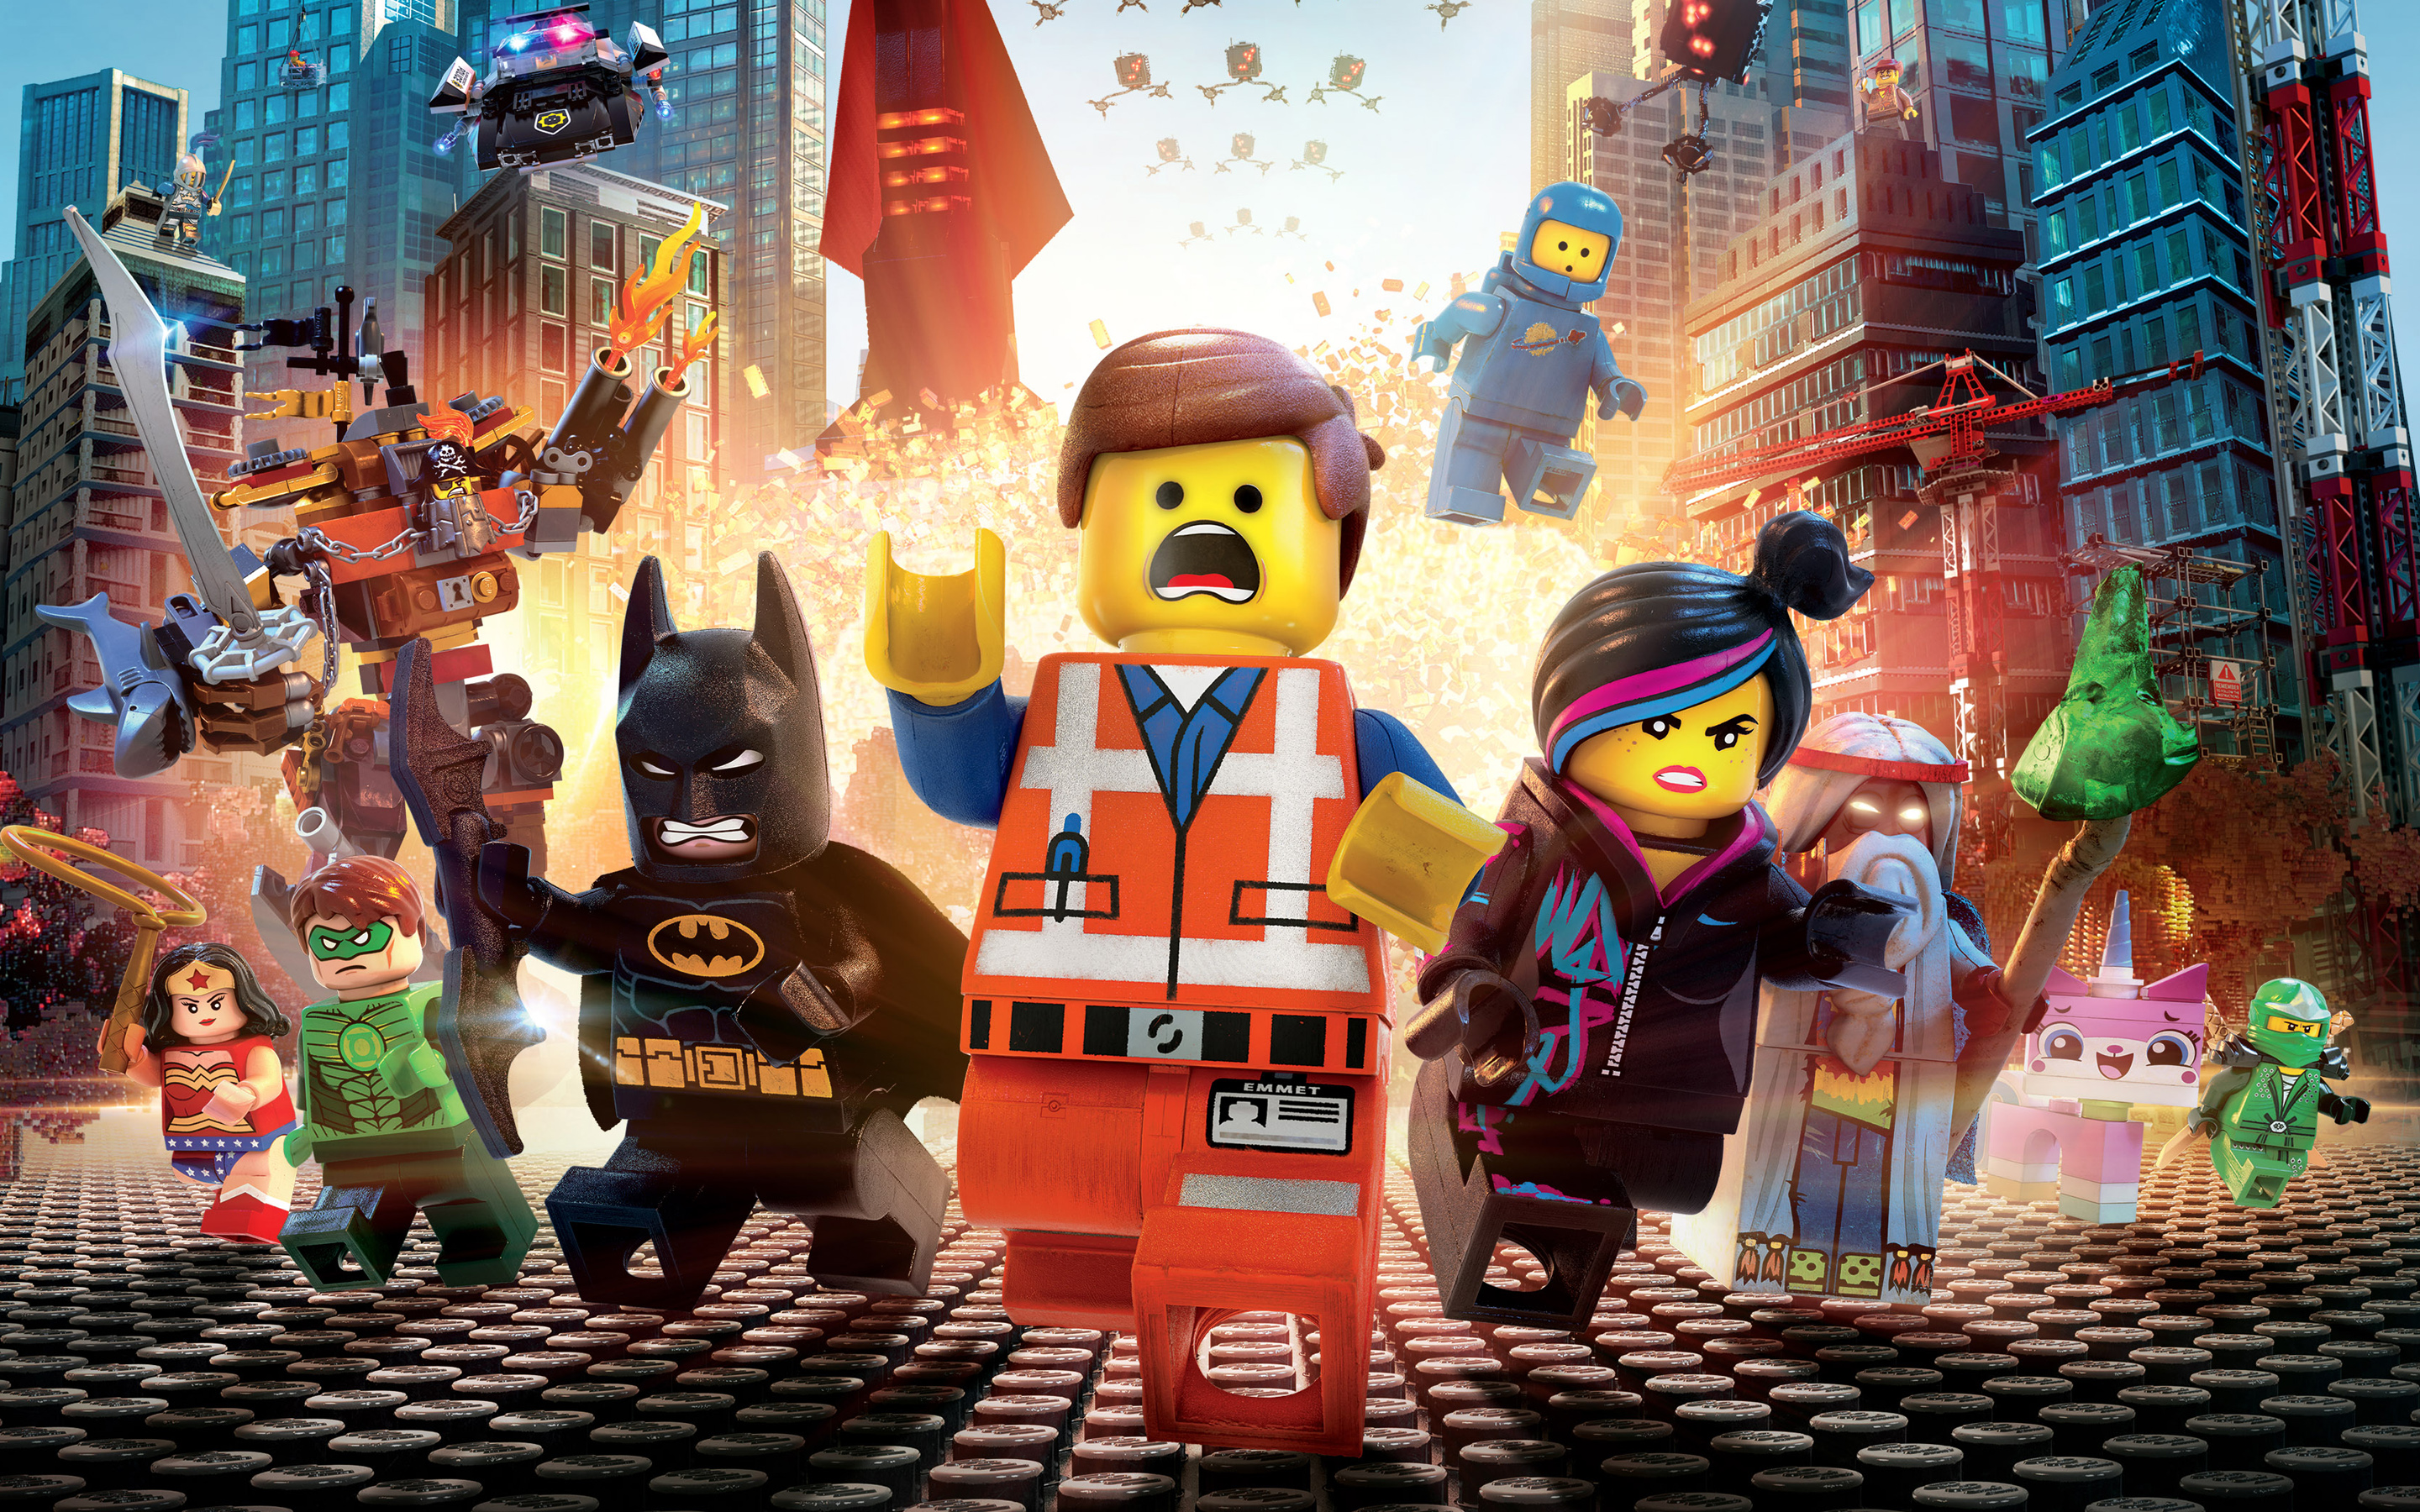 Podcast: The Lego Movie – Extra Film